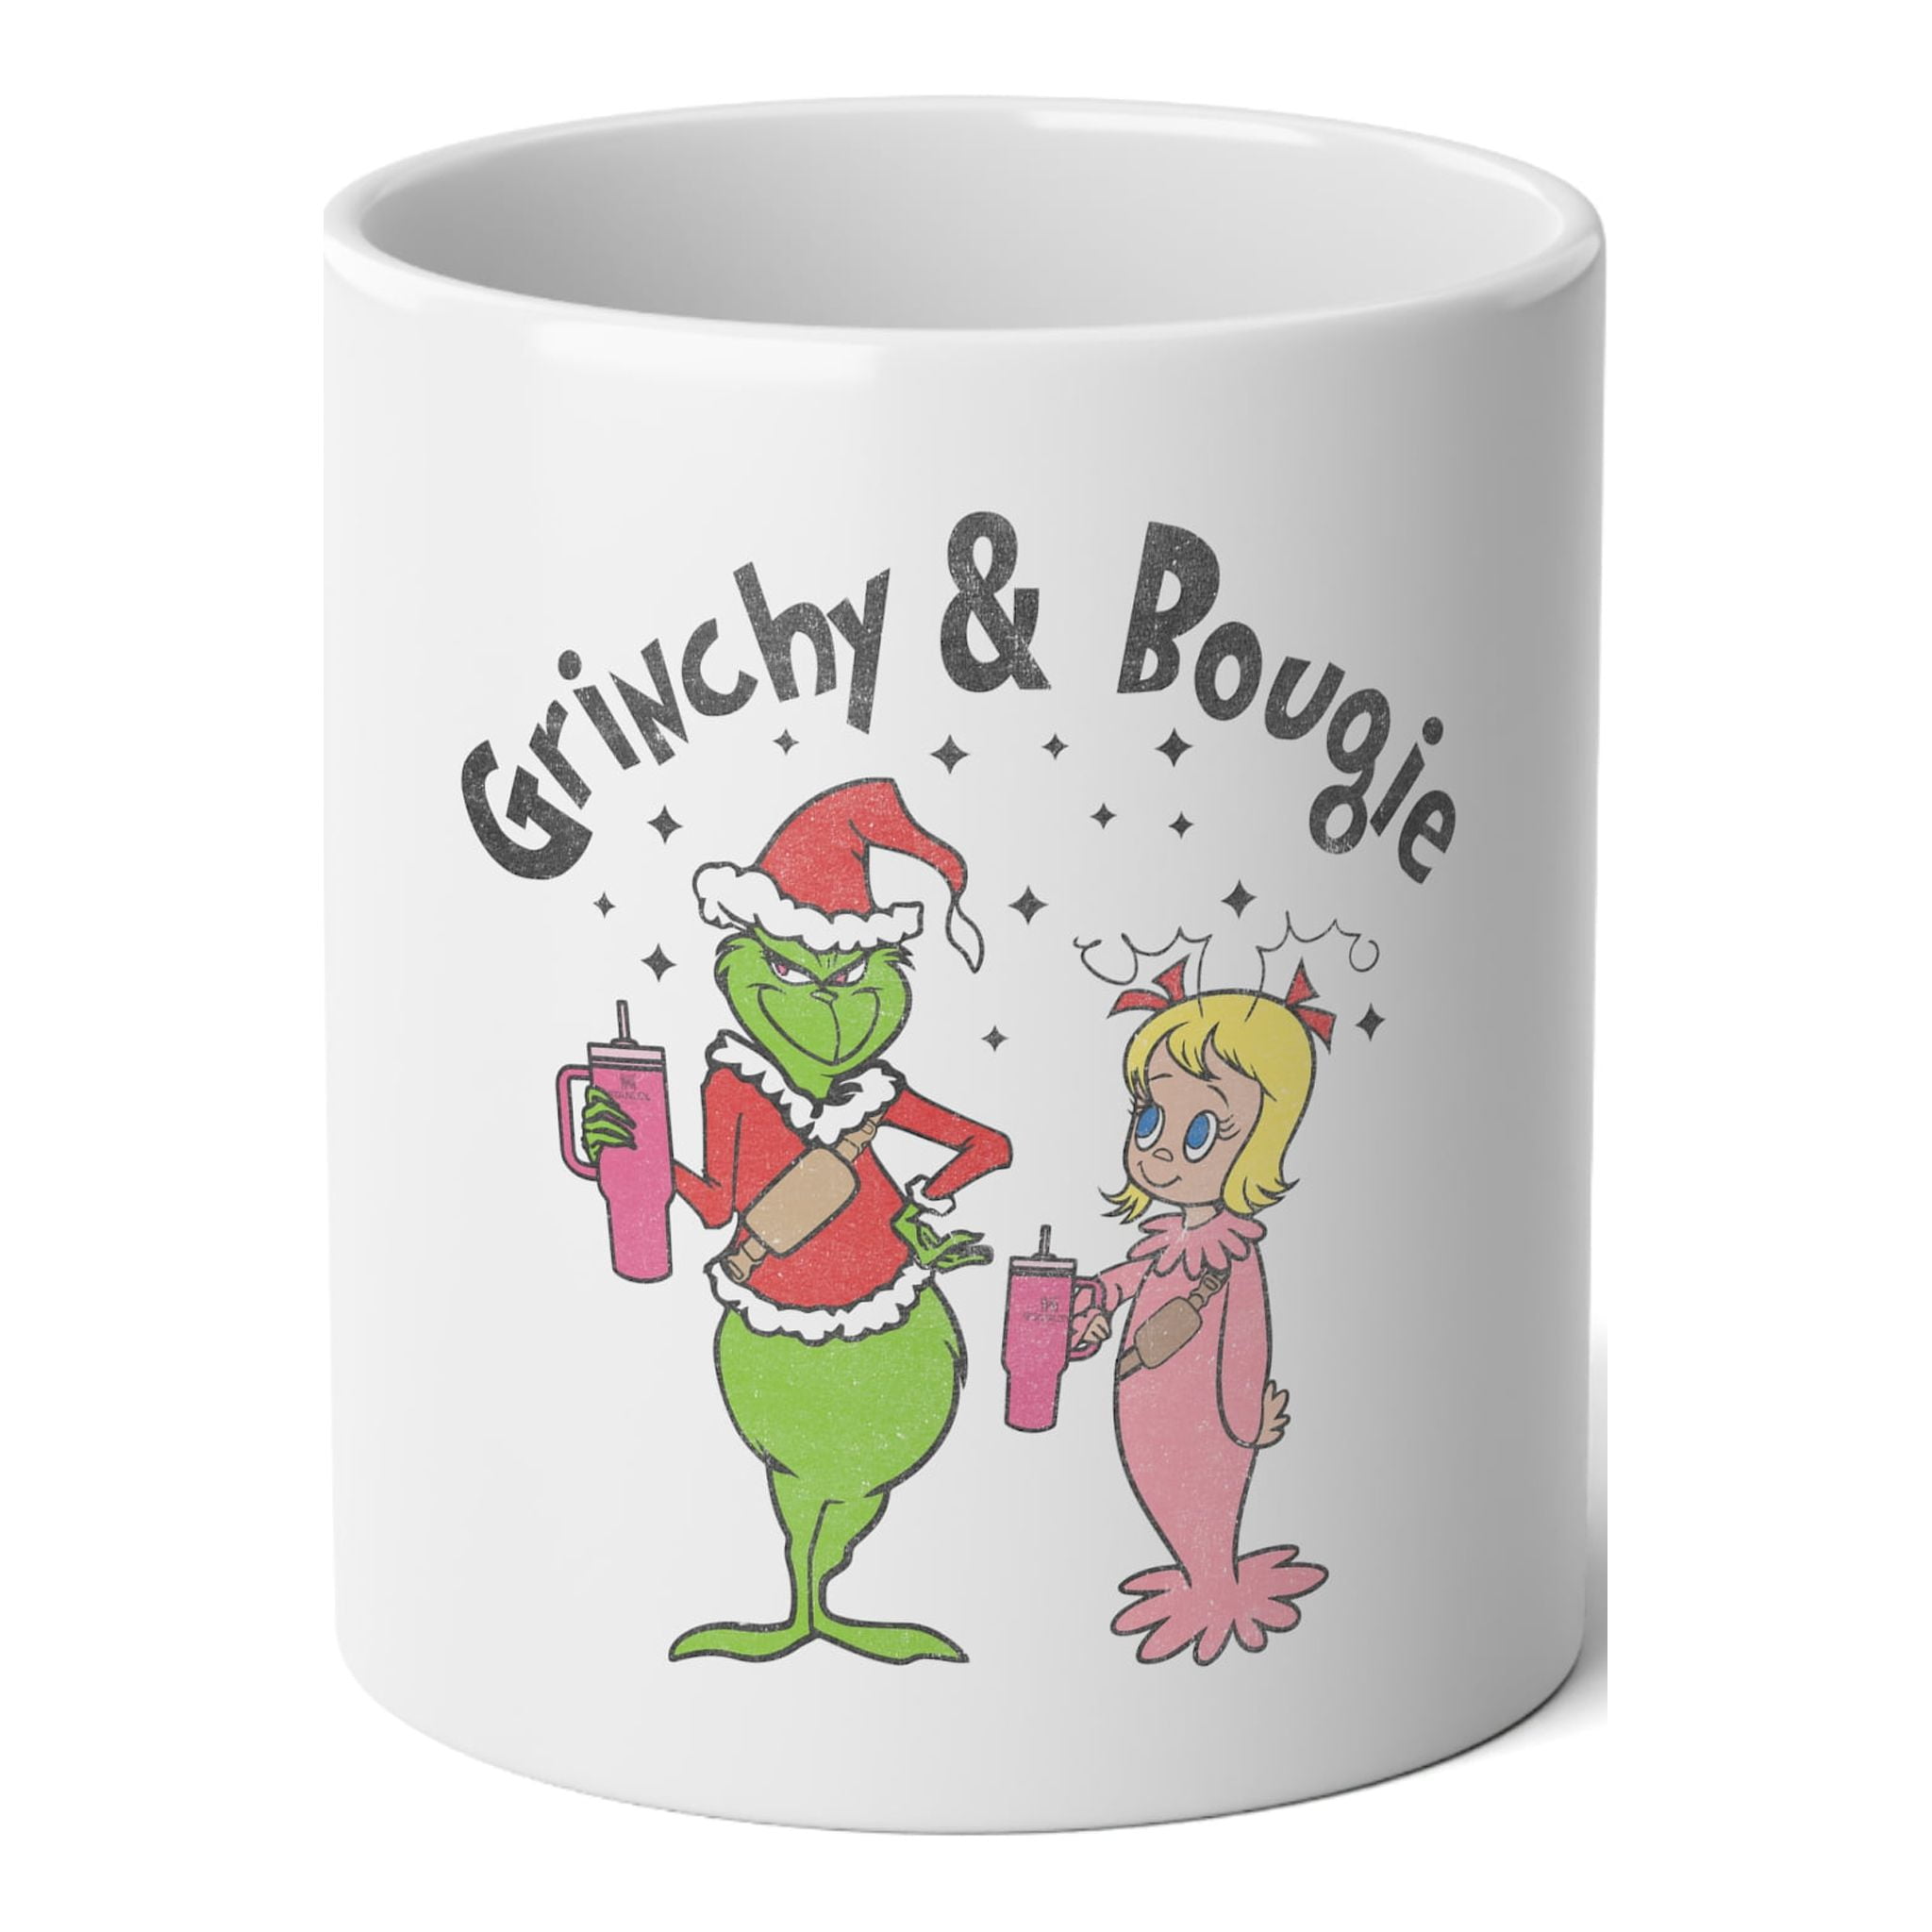 Grinchy era, boujie stanley, printed on both sides Jumbo coffee Mug, 20oz